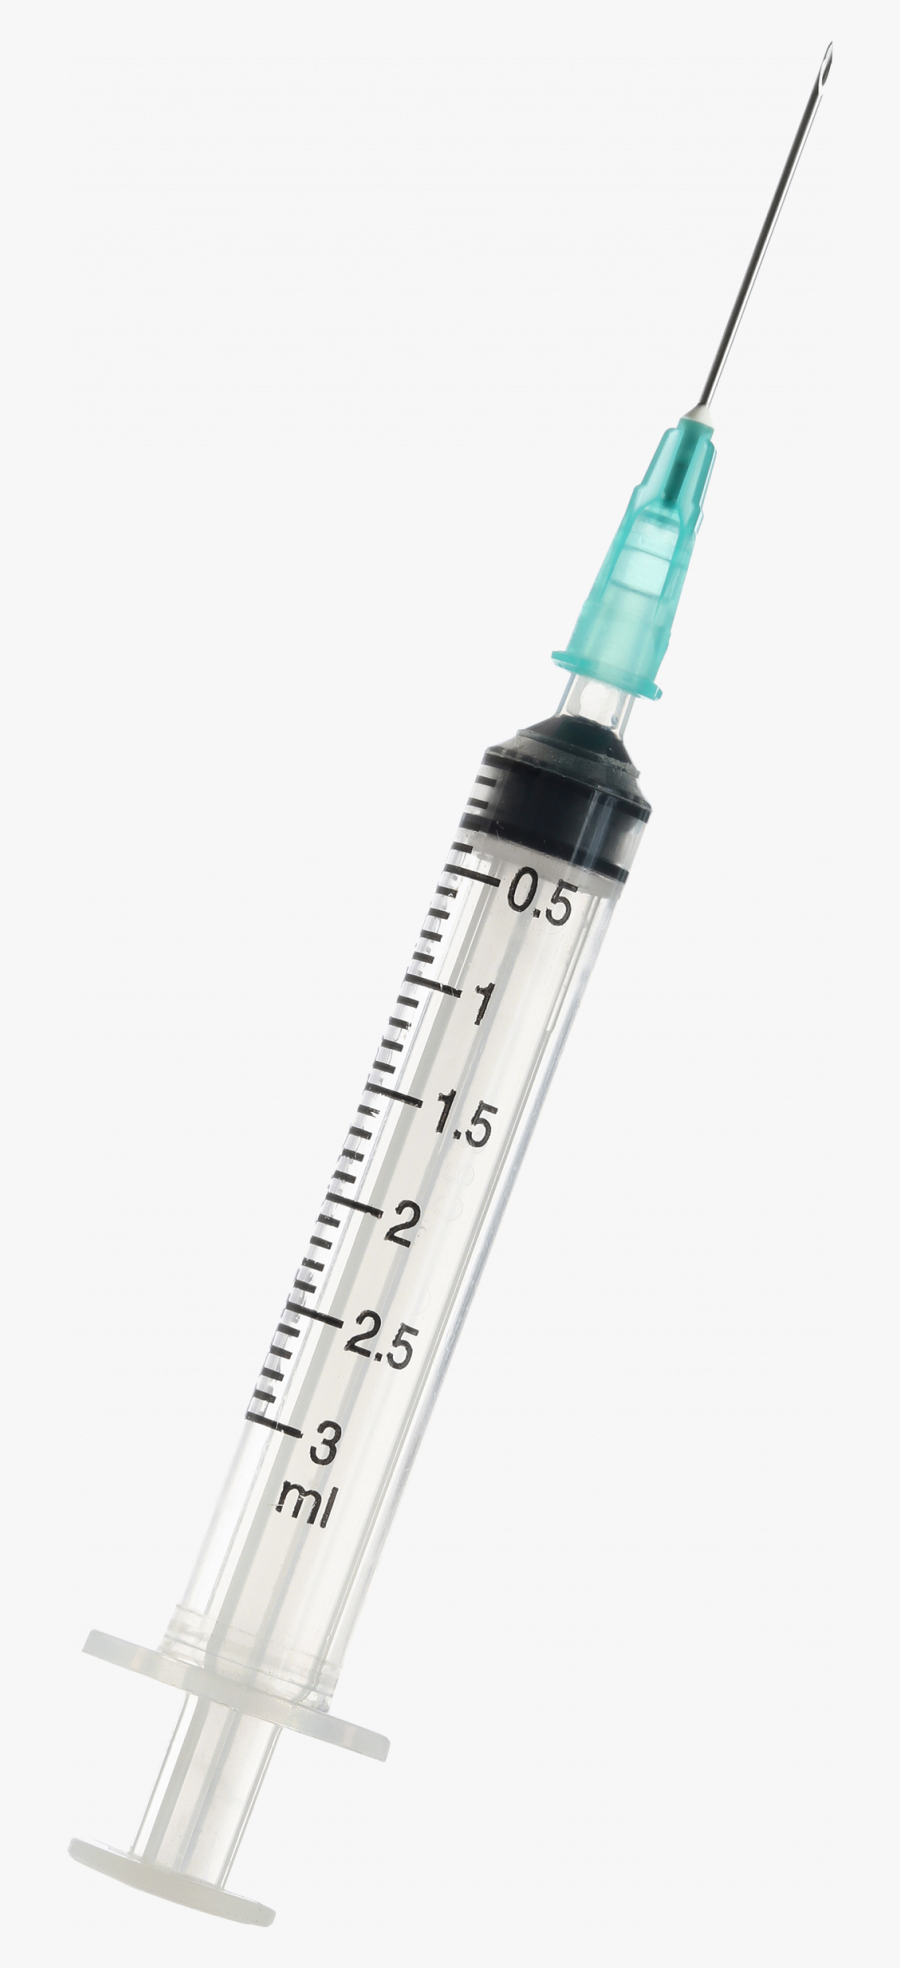 Best Free Syringe Png Image Without Background - Transparent Background Syringe Png, Transparent Clipart